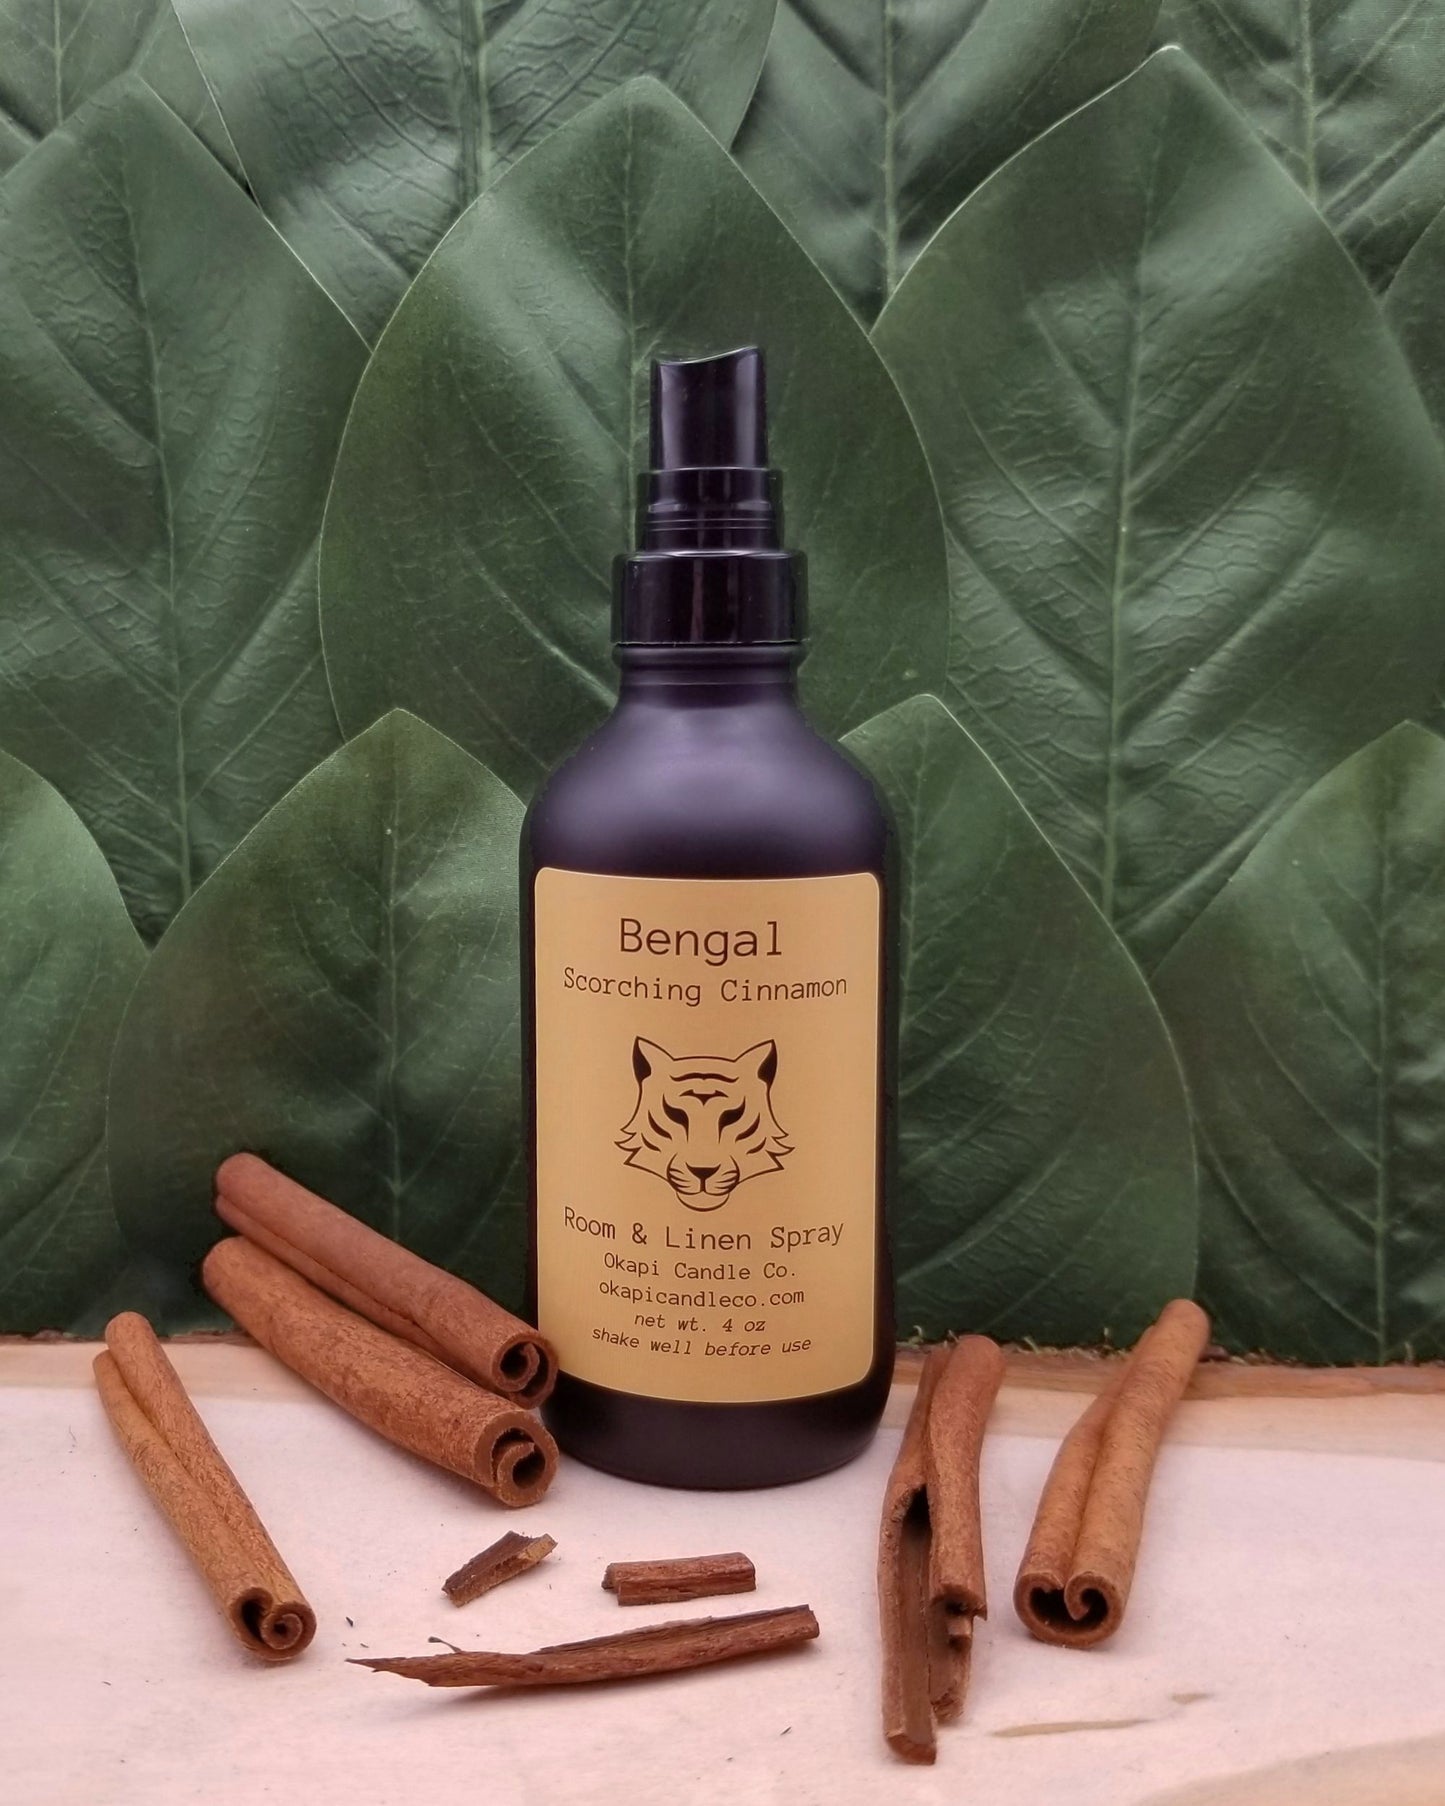 Bengal Tiger Room Spray - Scorching Cinnamon Fragrance